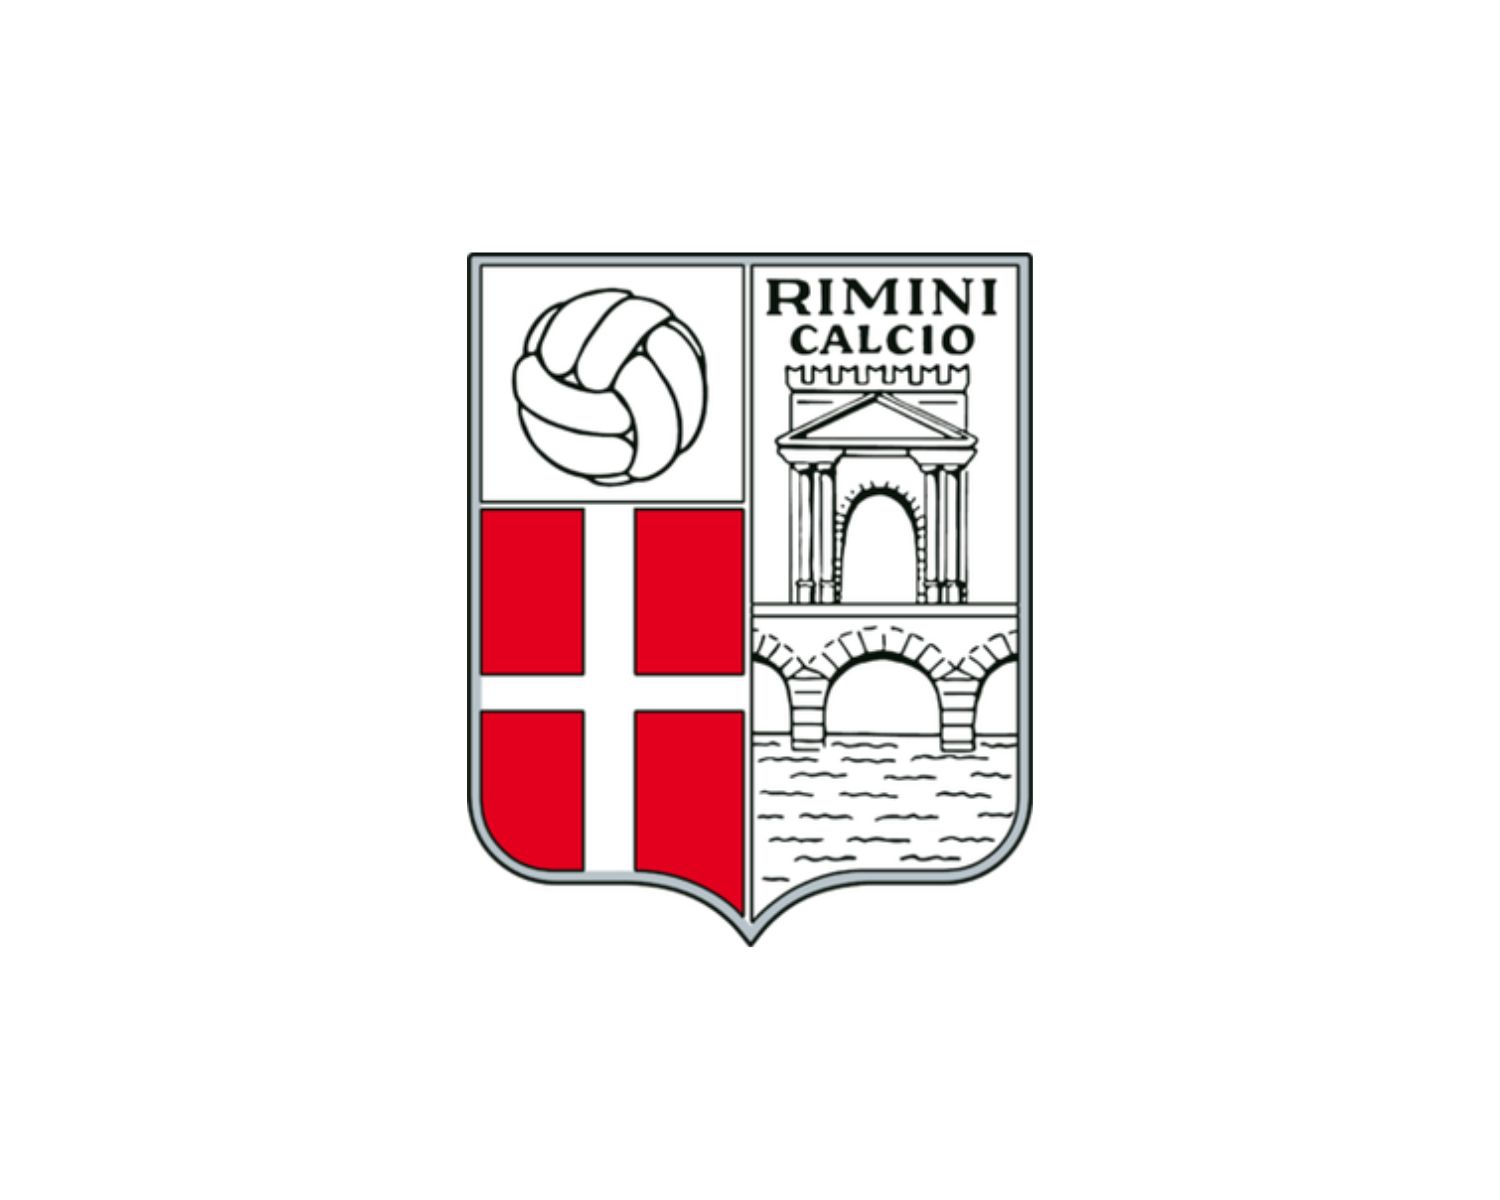 ac-rimini-1912-13-football-club-facts